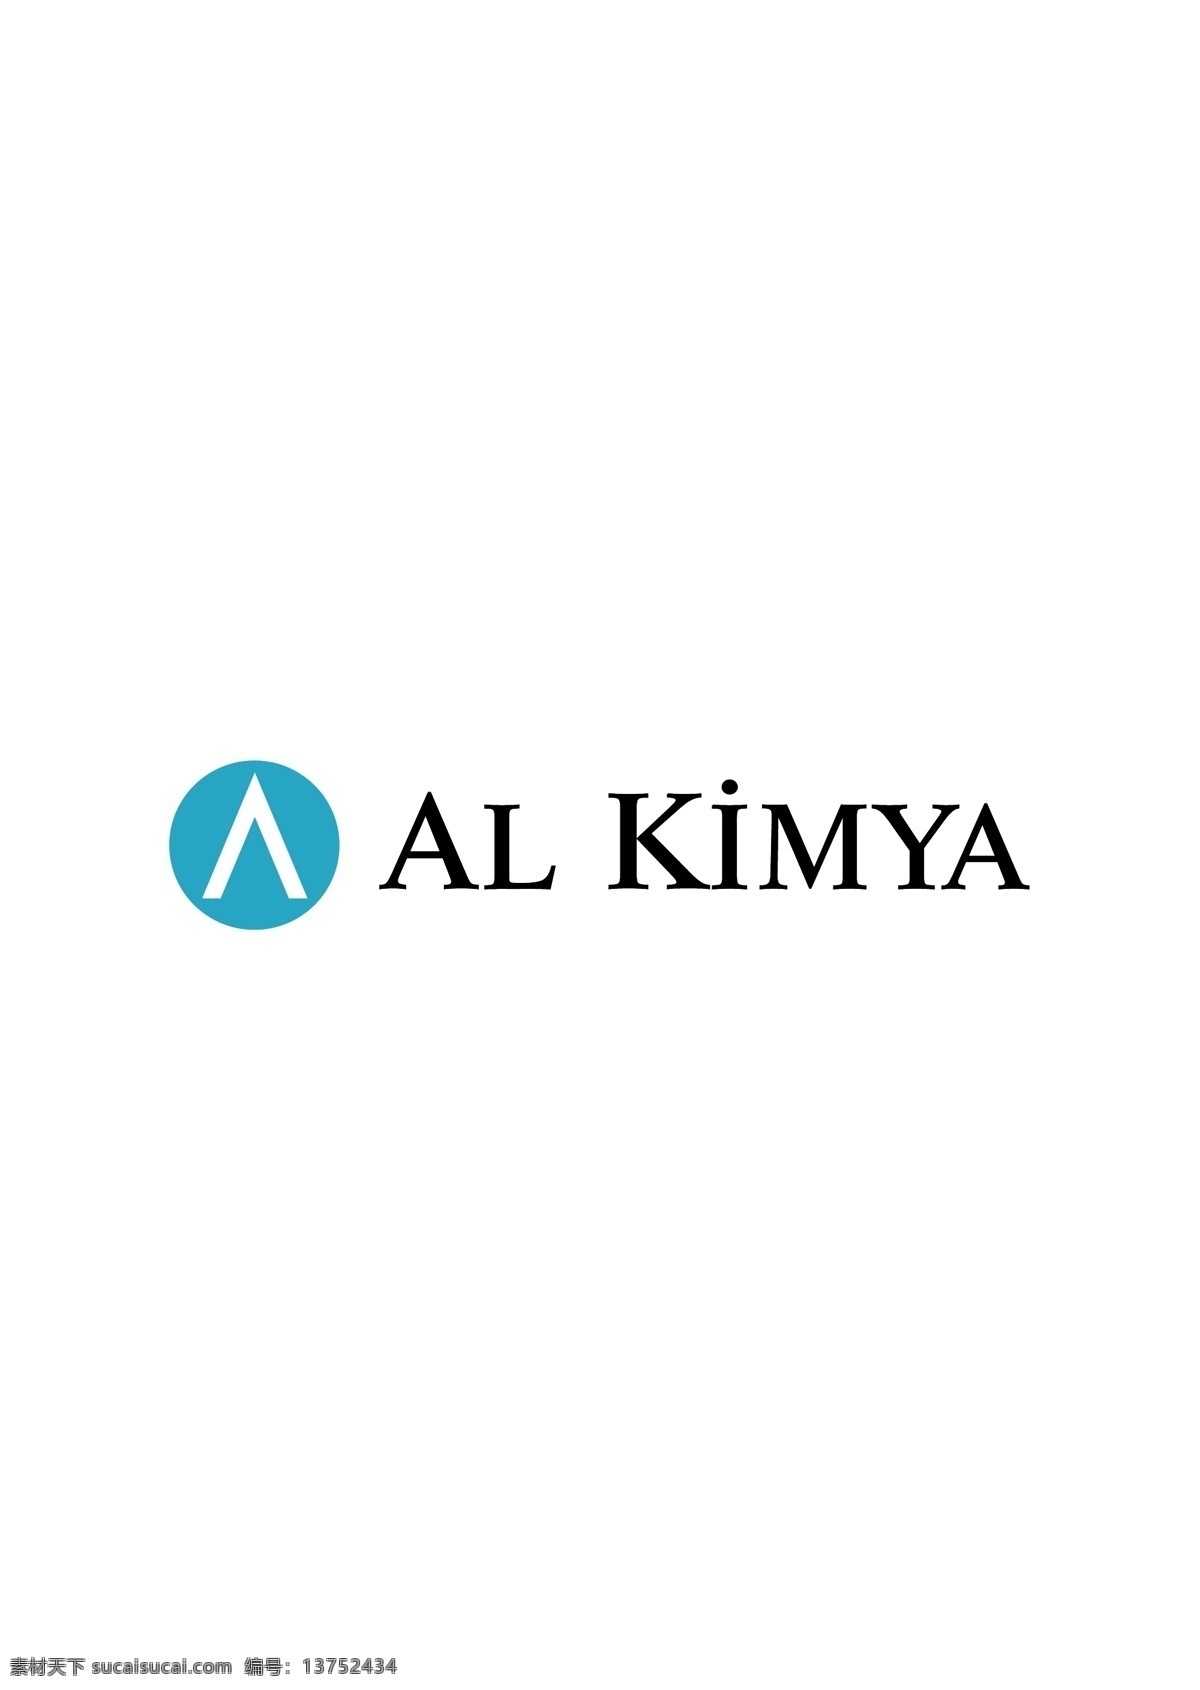 alkimya logo大全 logo 设计欣赏 商业矢量 矢量下载 工业 标志 标志设计 欣赏 网页矢量 矢量图 其他矢量图